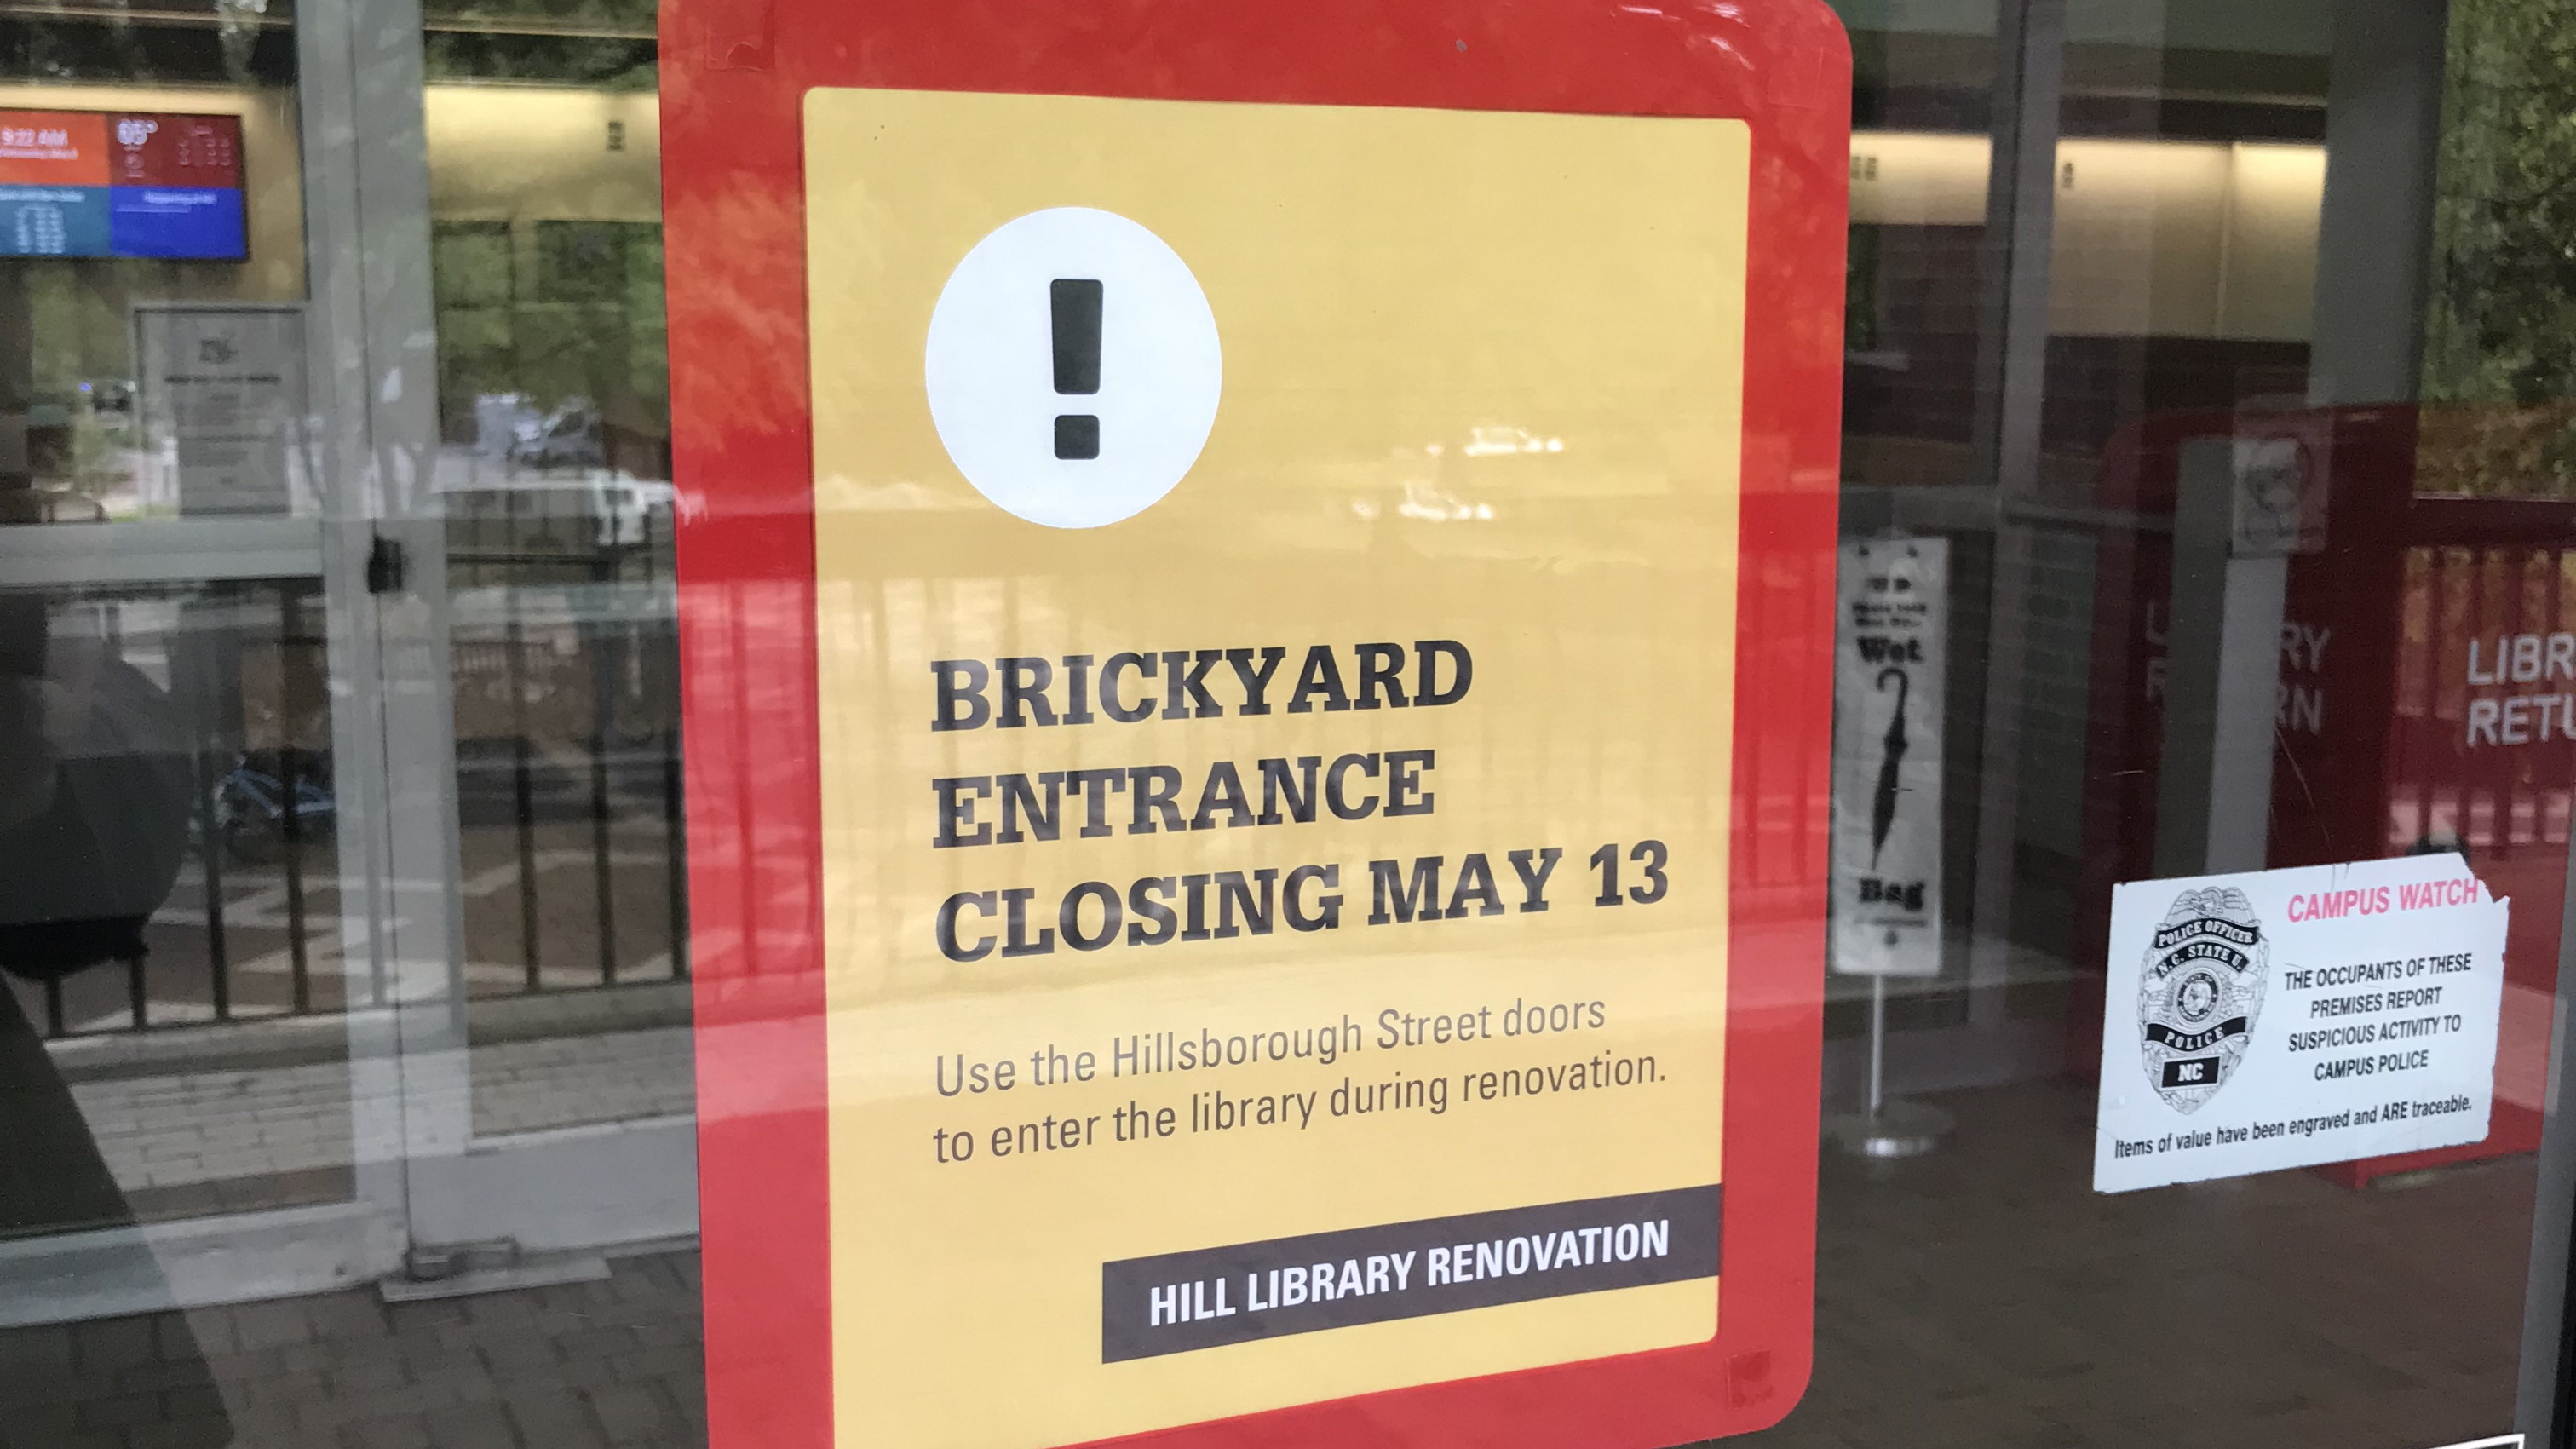 Brickyard entrance is closing for renovation.